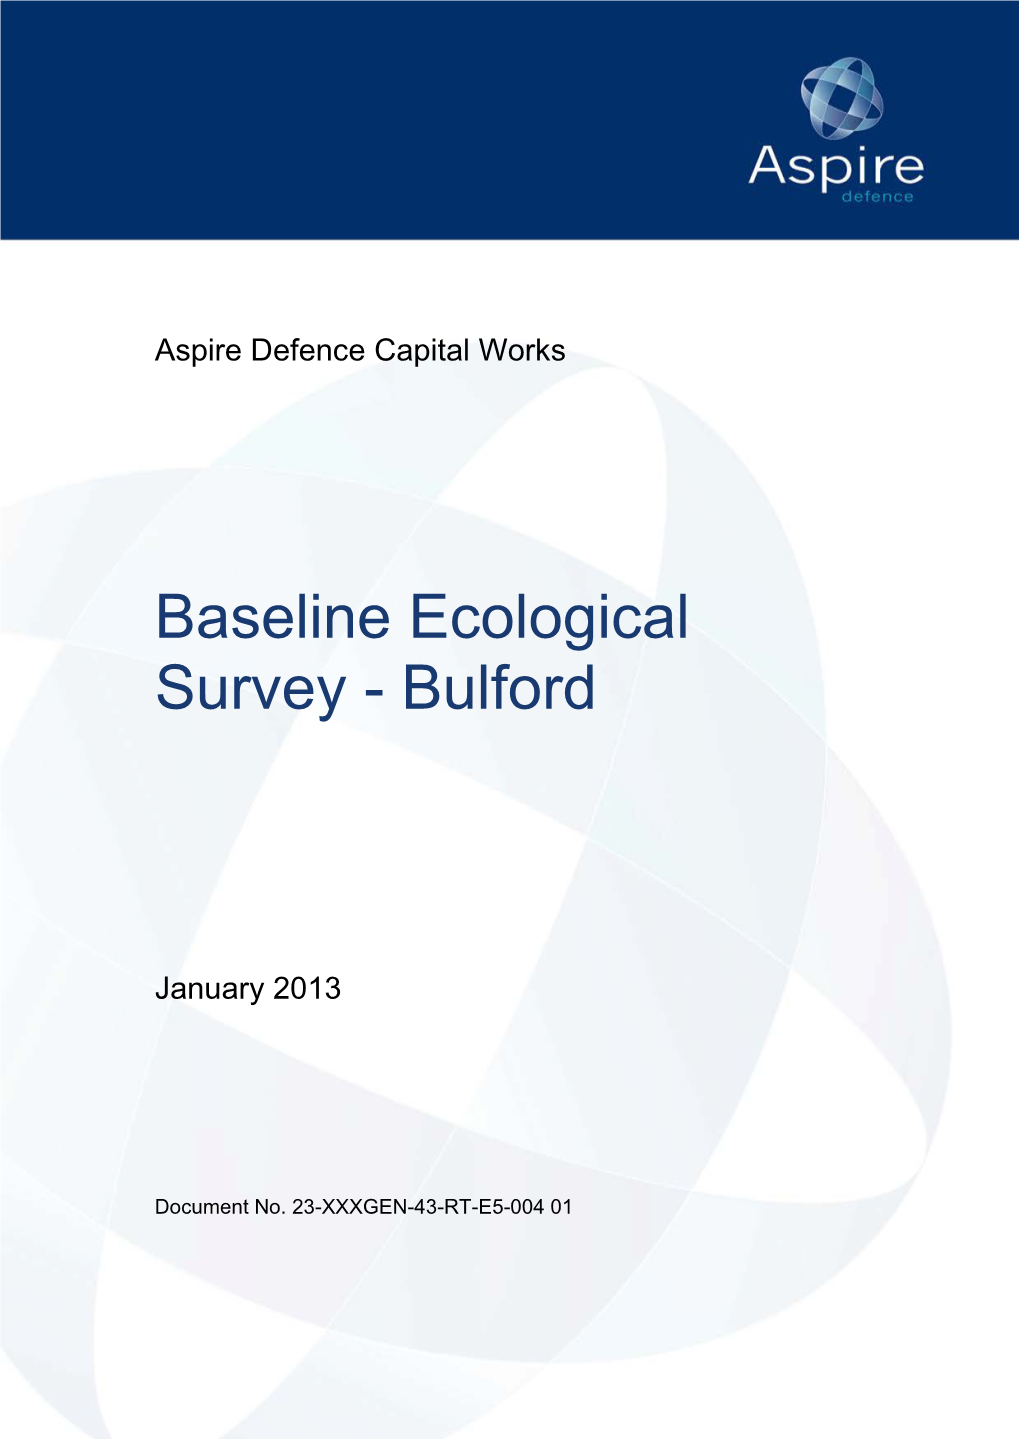 Baseline Ecological Survey, Bulford